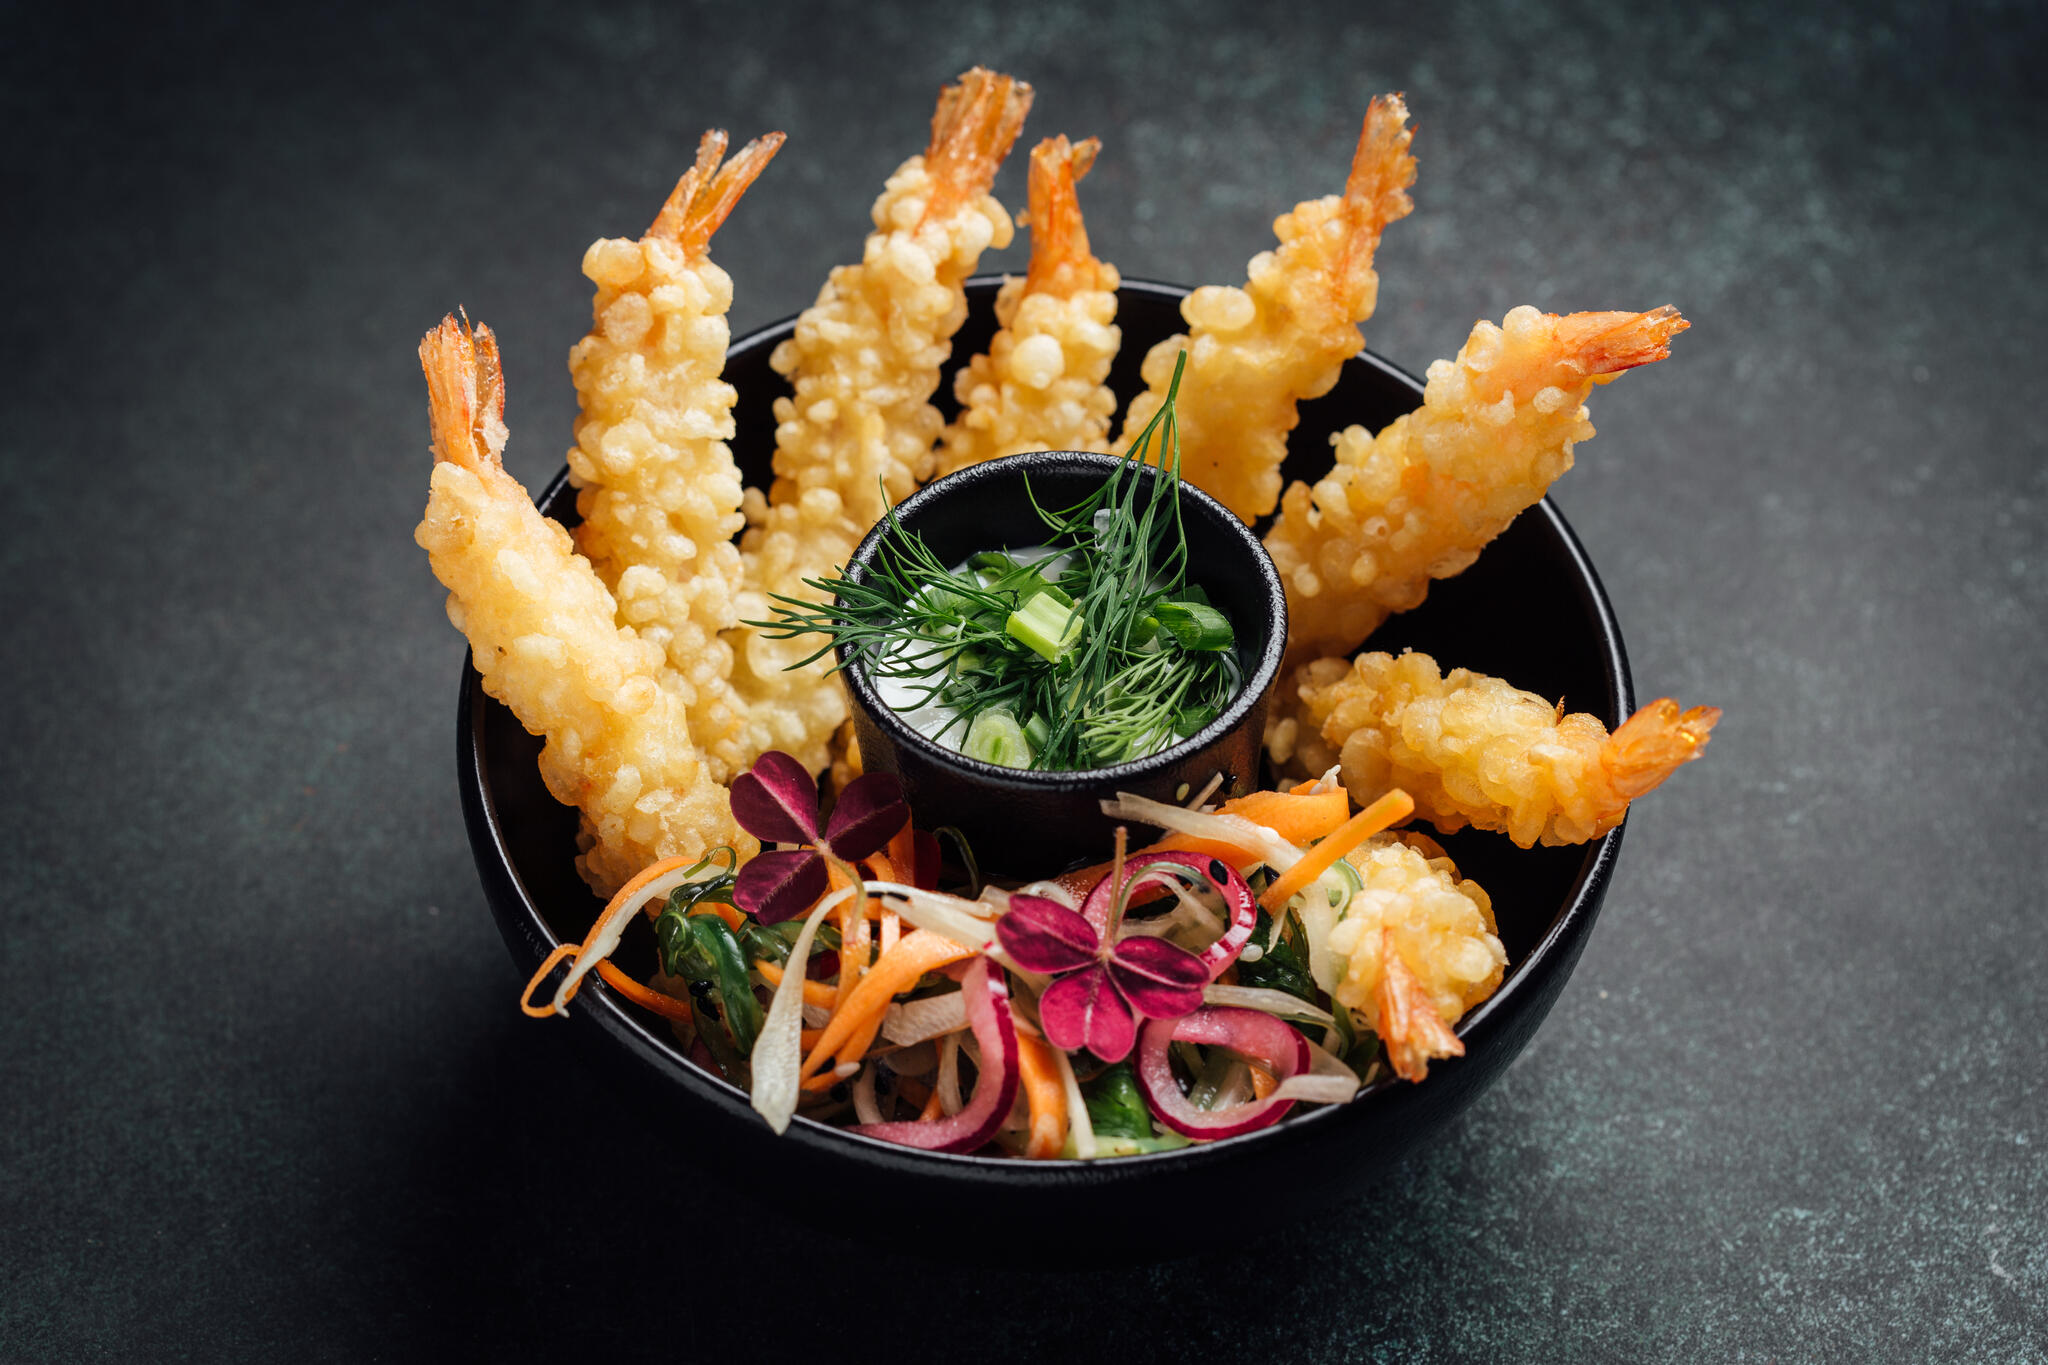 King prawn tempura